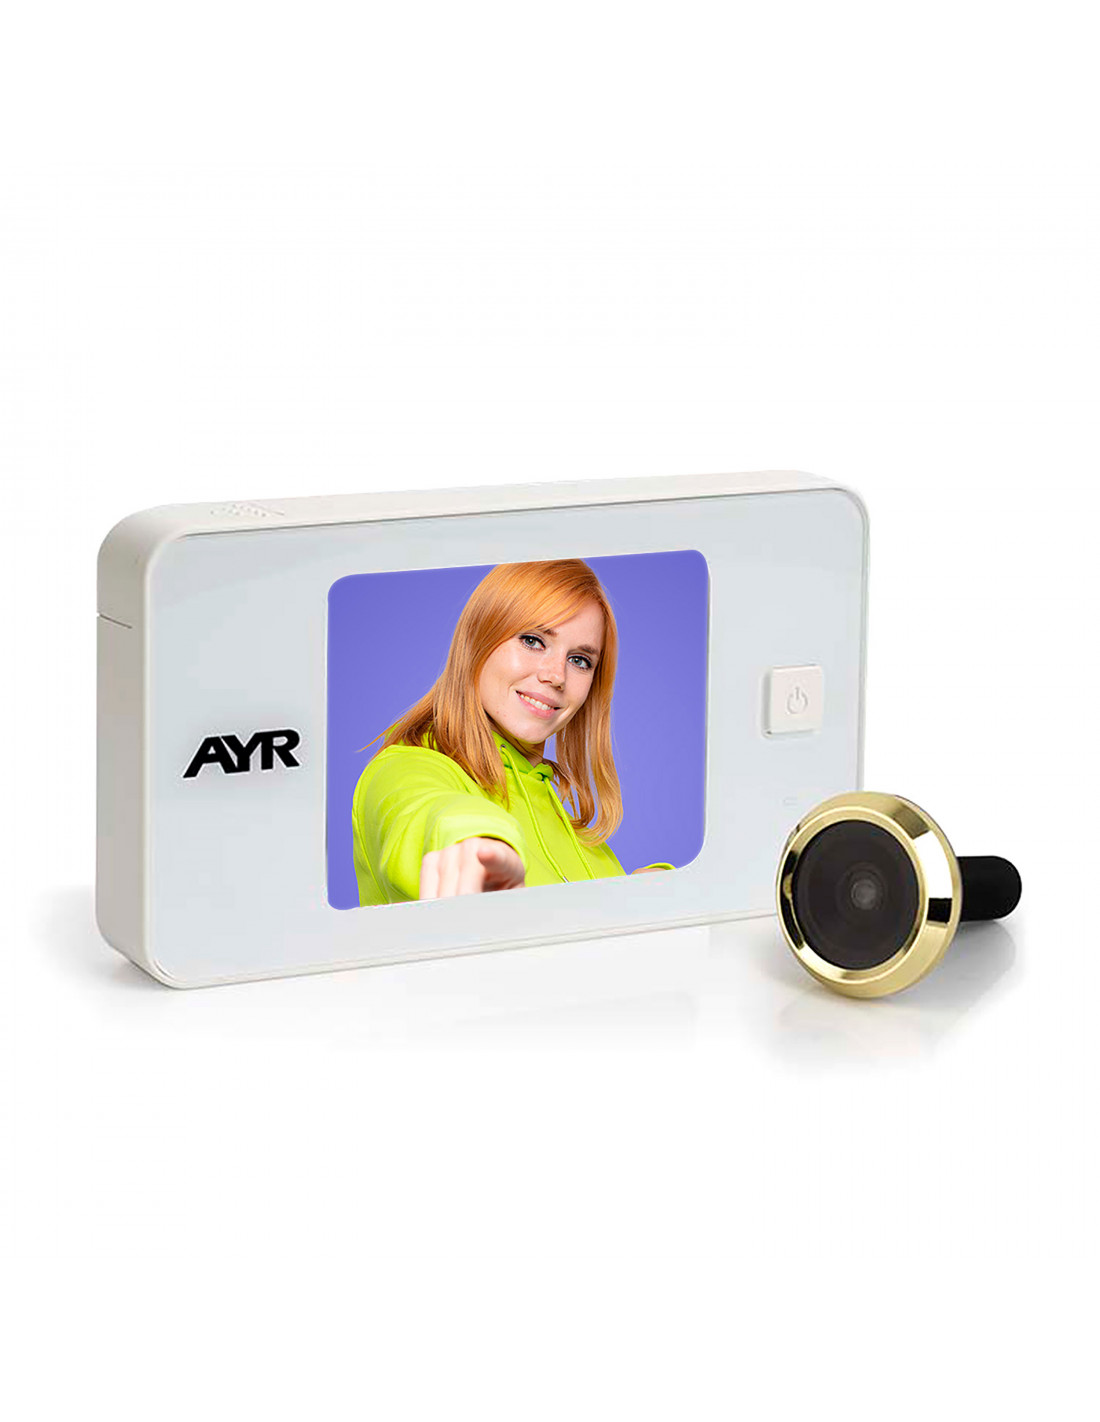 Probamos la mirilla digital de AYR, para proteger a la familia